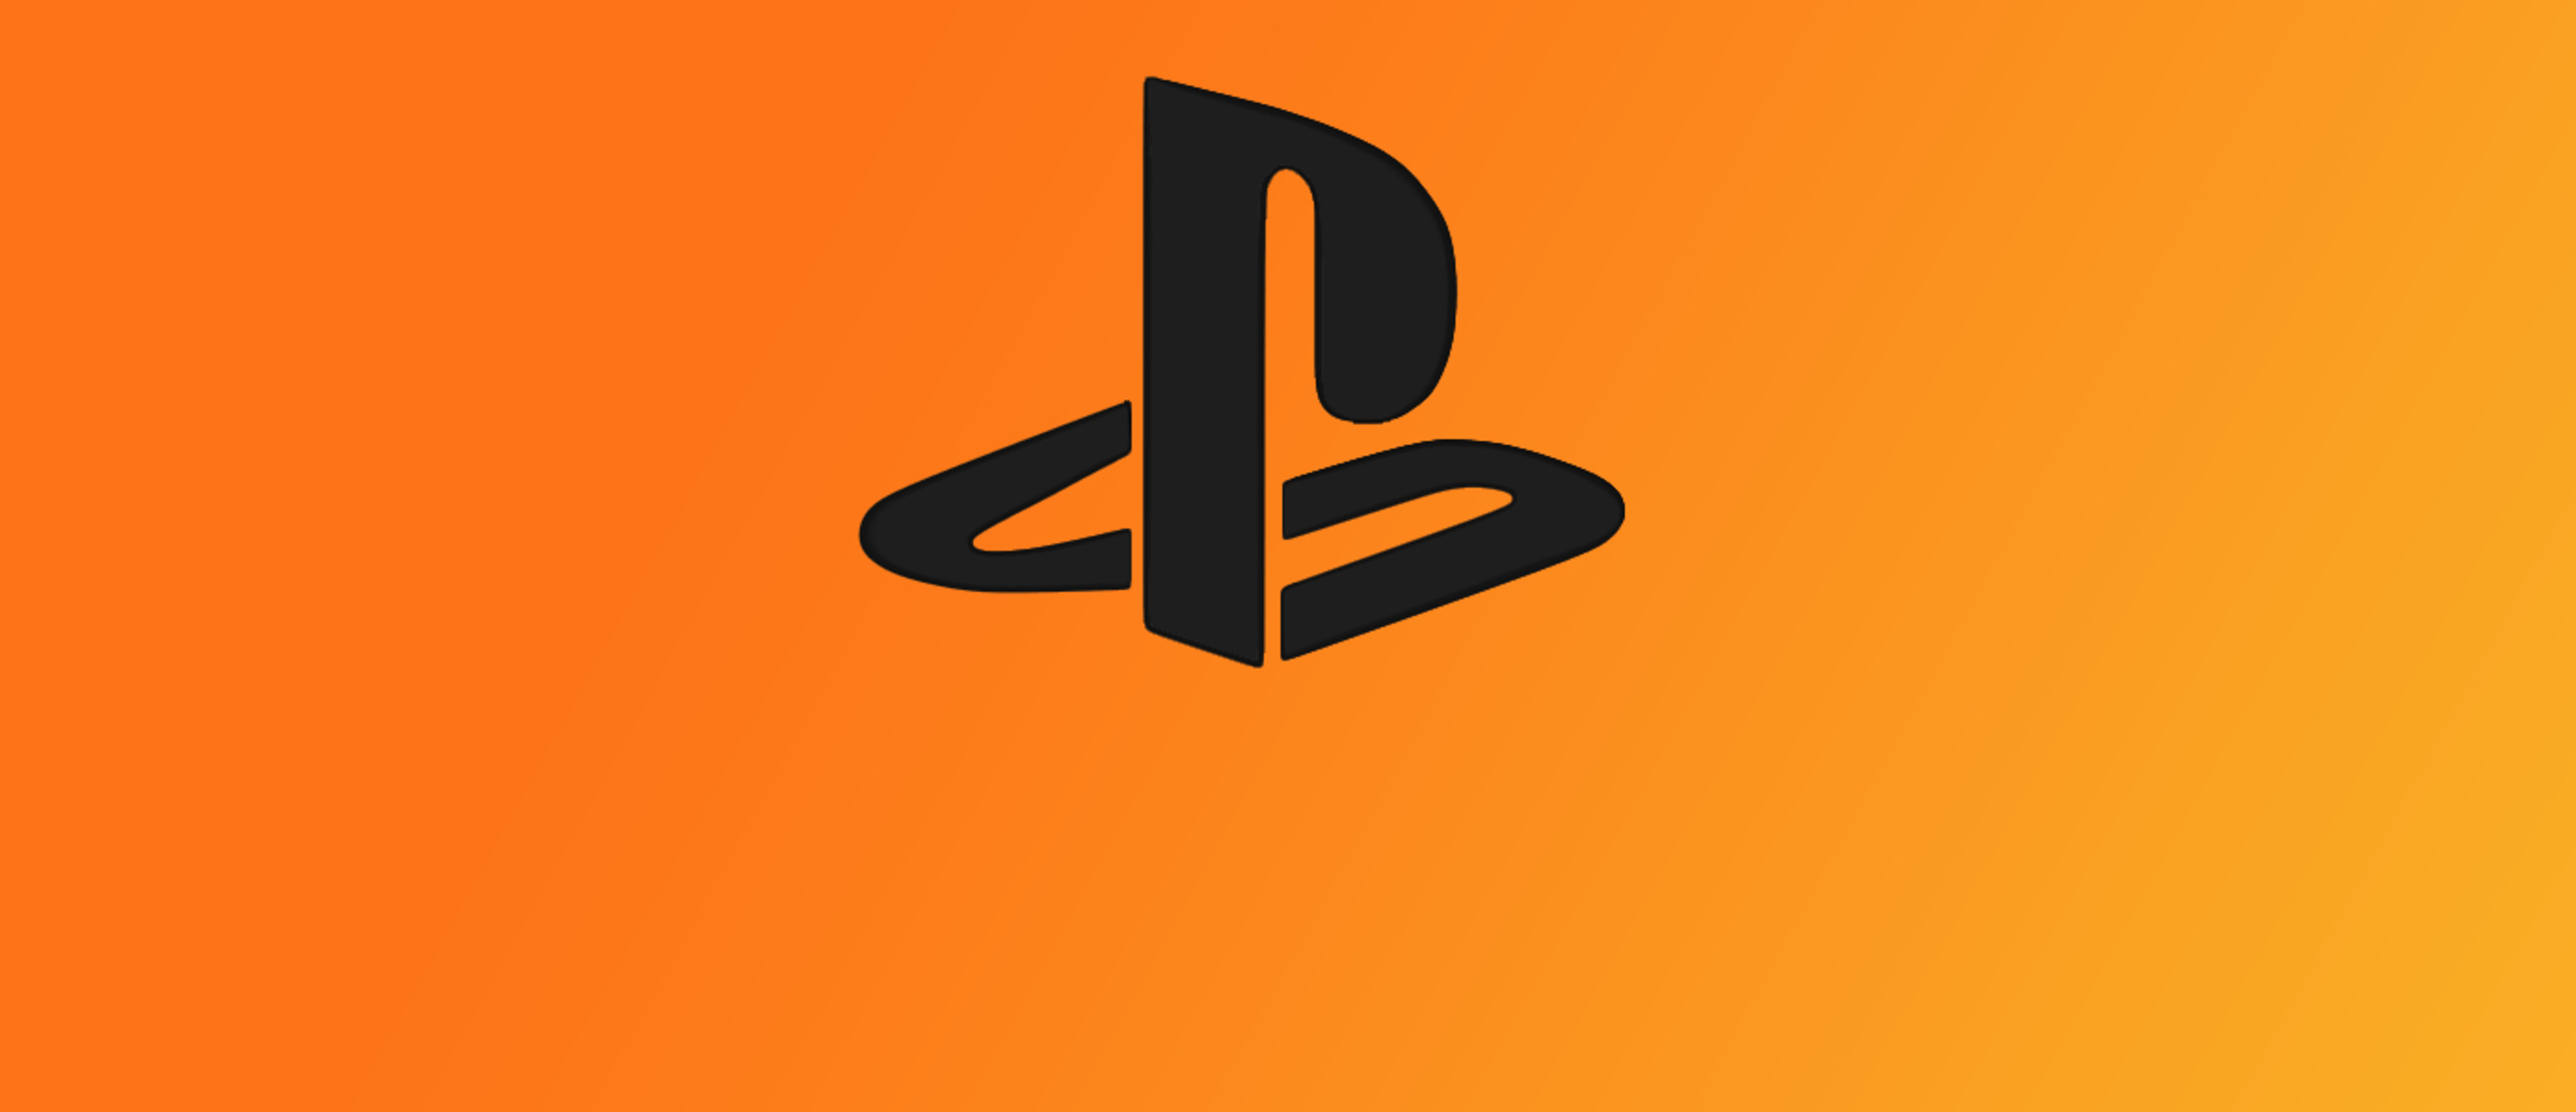 Заставка playstation. Sony PLAYSTATION логотип ПС 4. PS заставка. PLAYSTATION обои. Заставка PLAYSTATION 5.